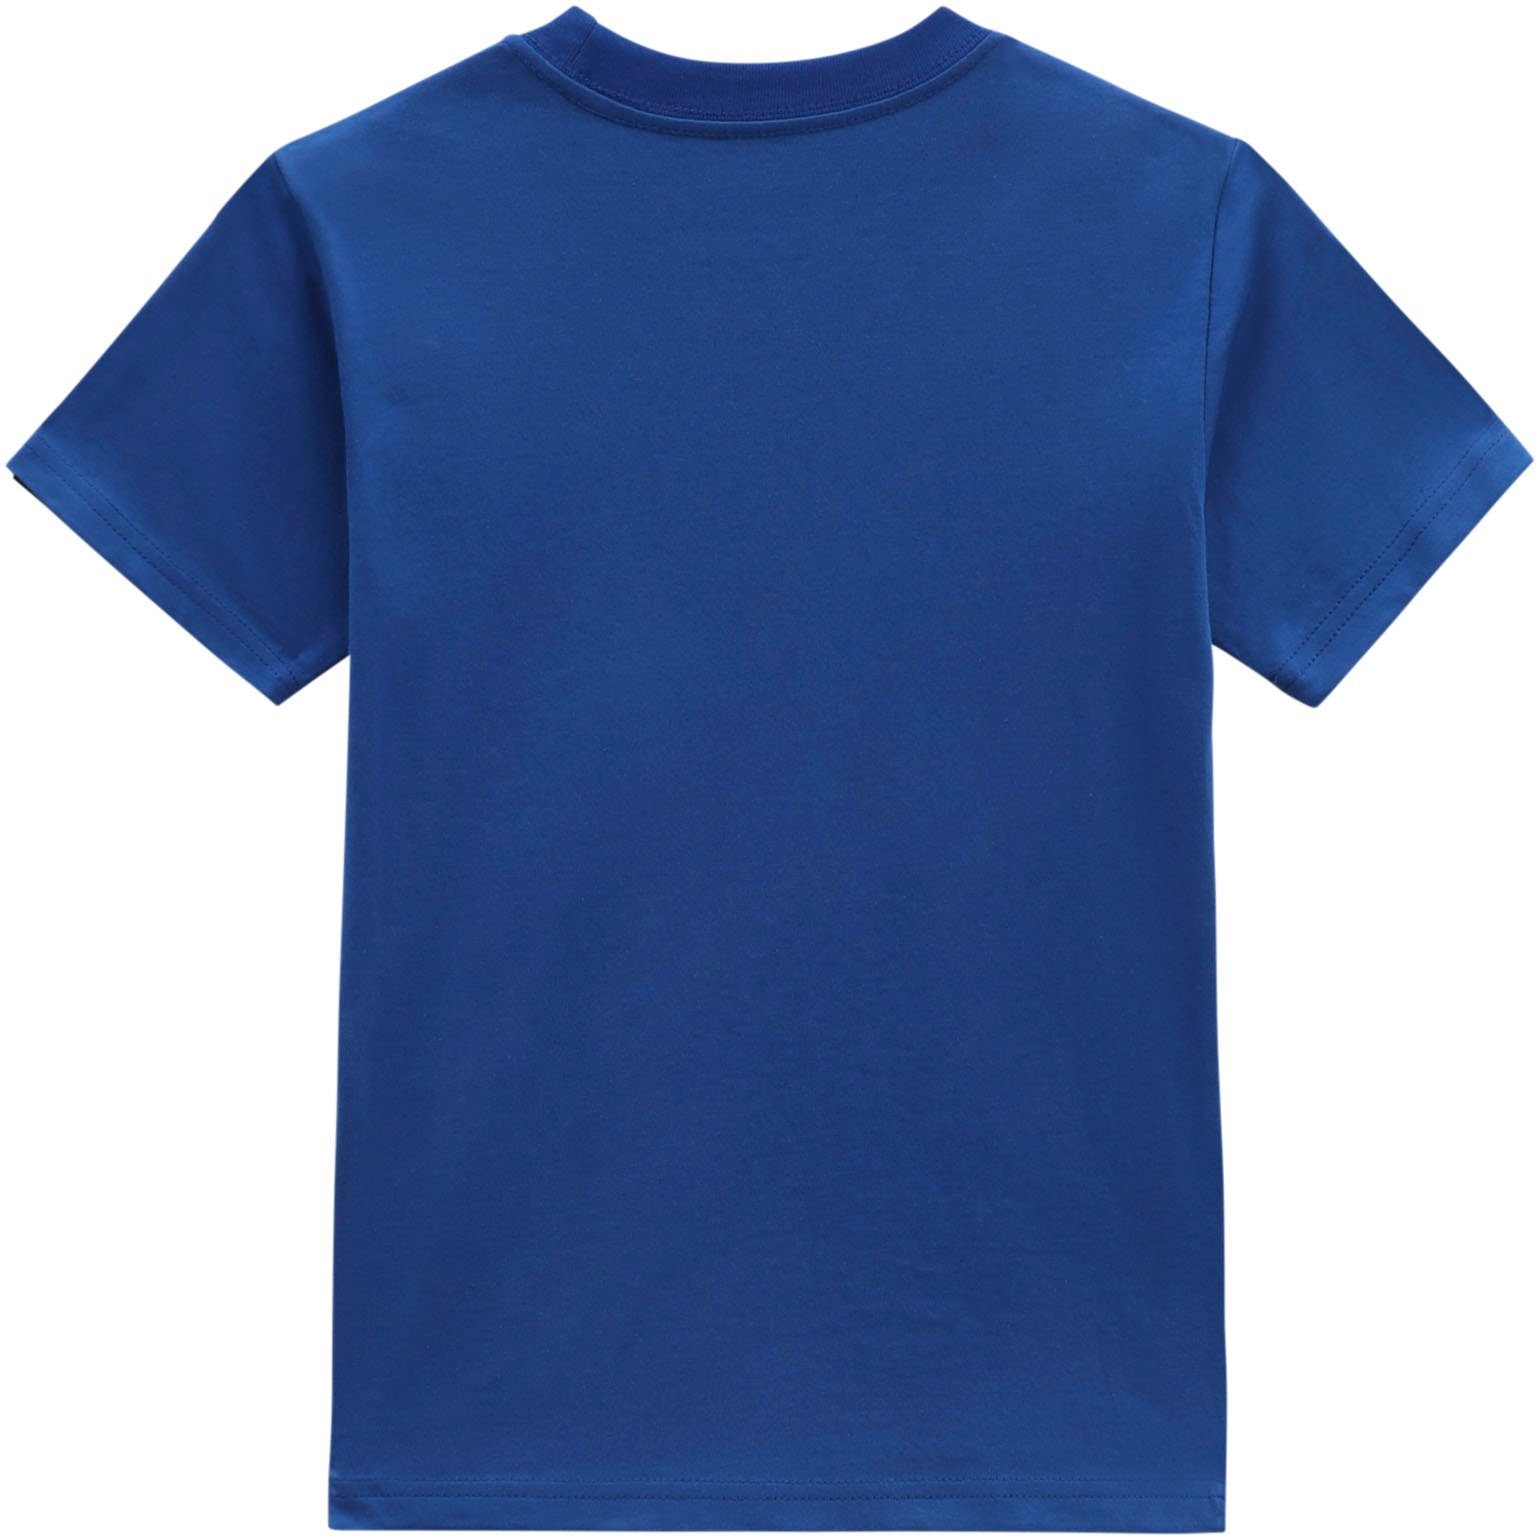 Vans T-Shirt BY VANS white blue/ CLASSIC KIDS